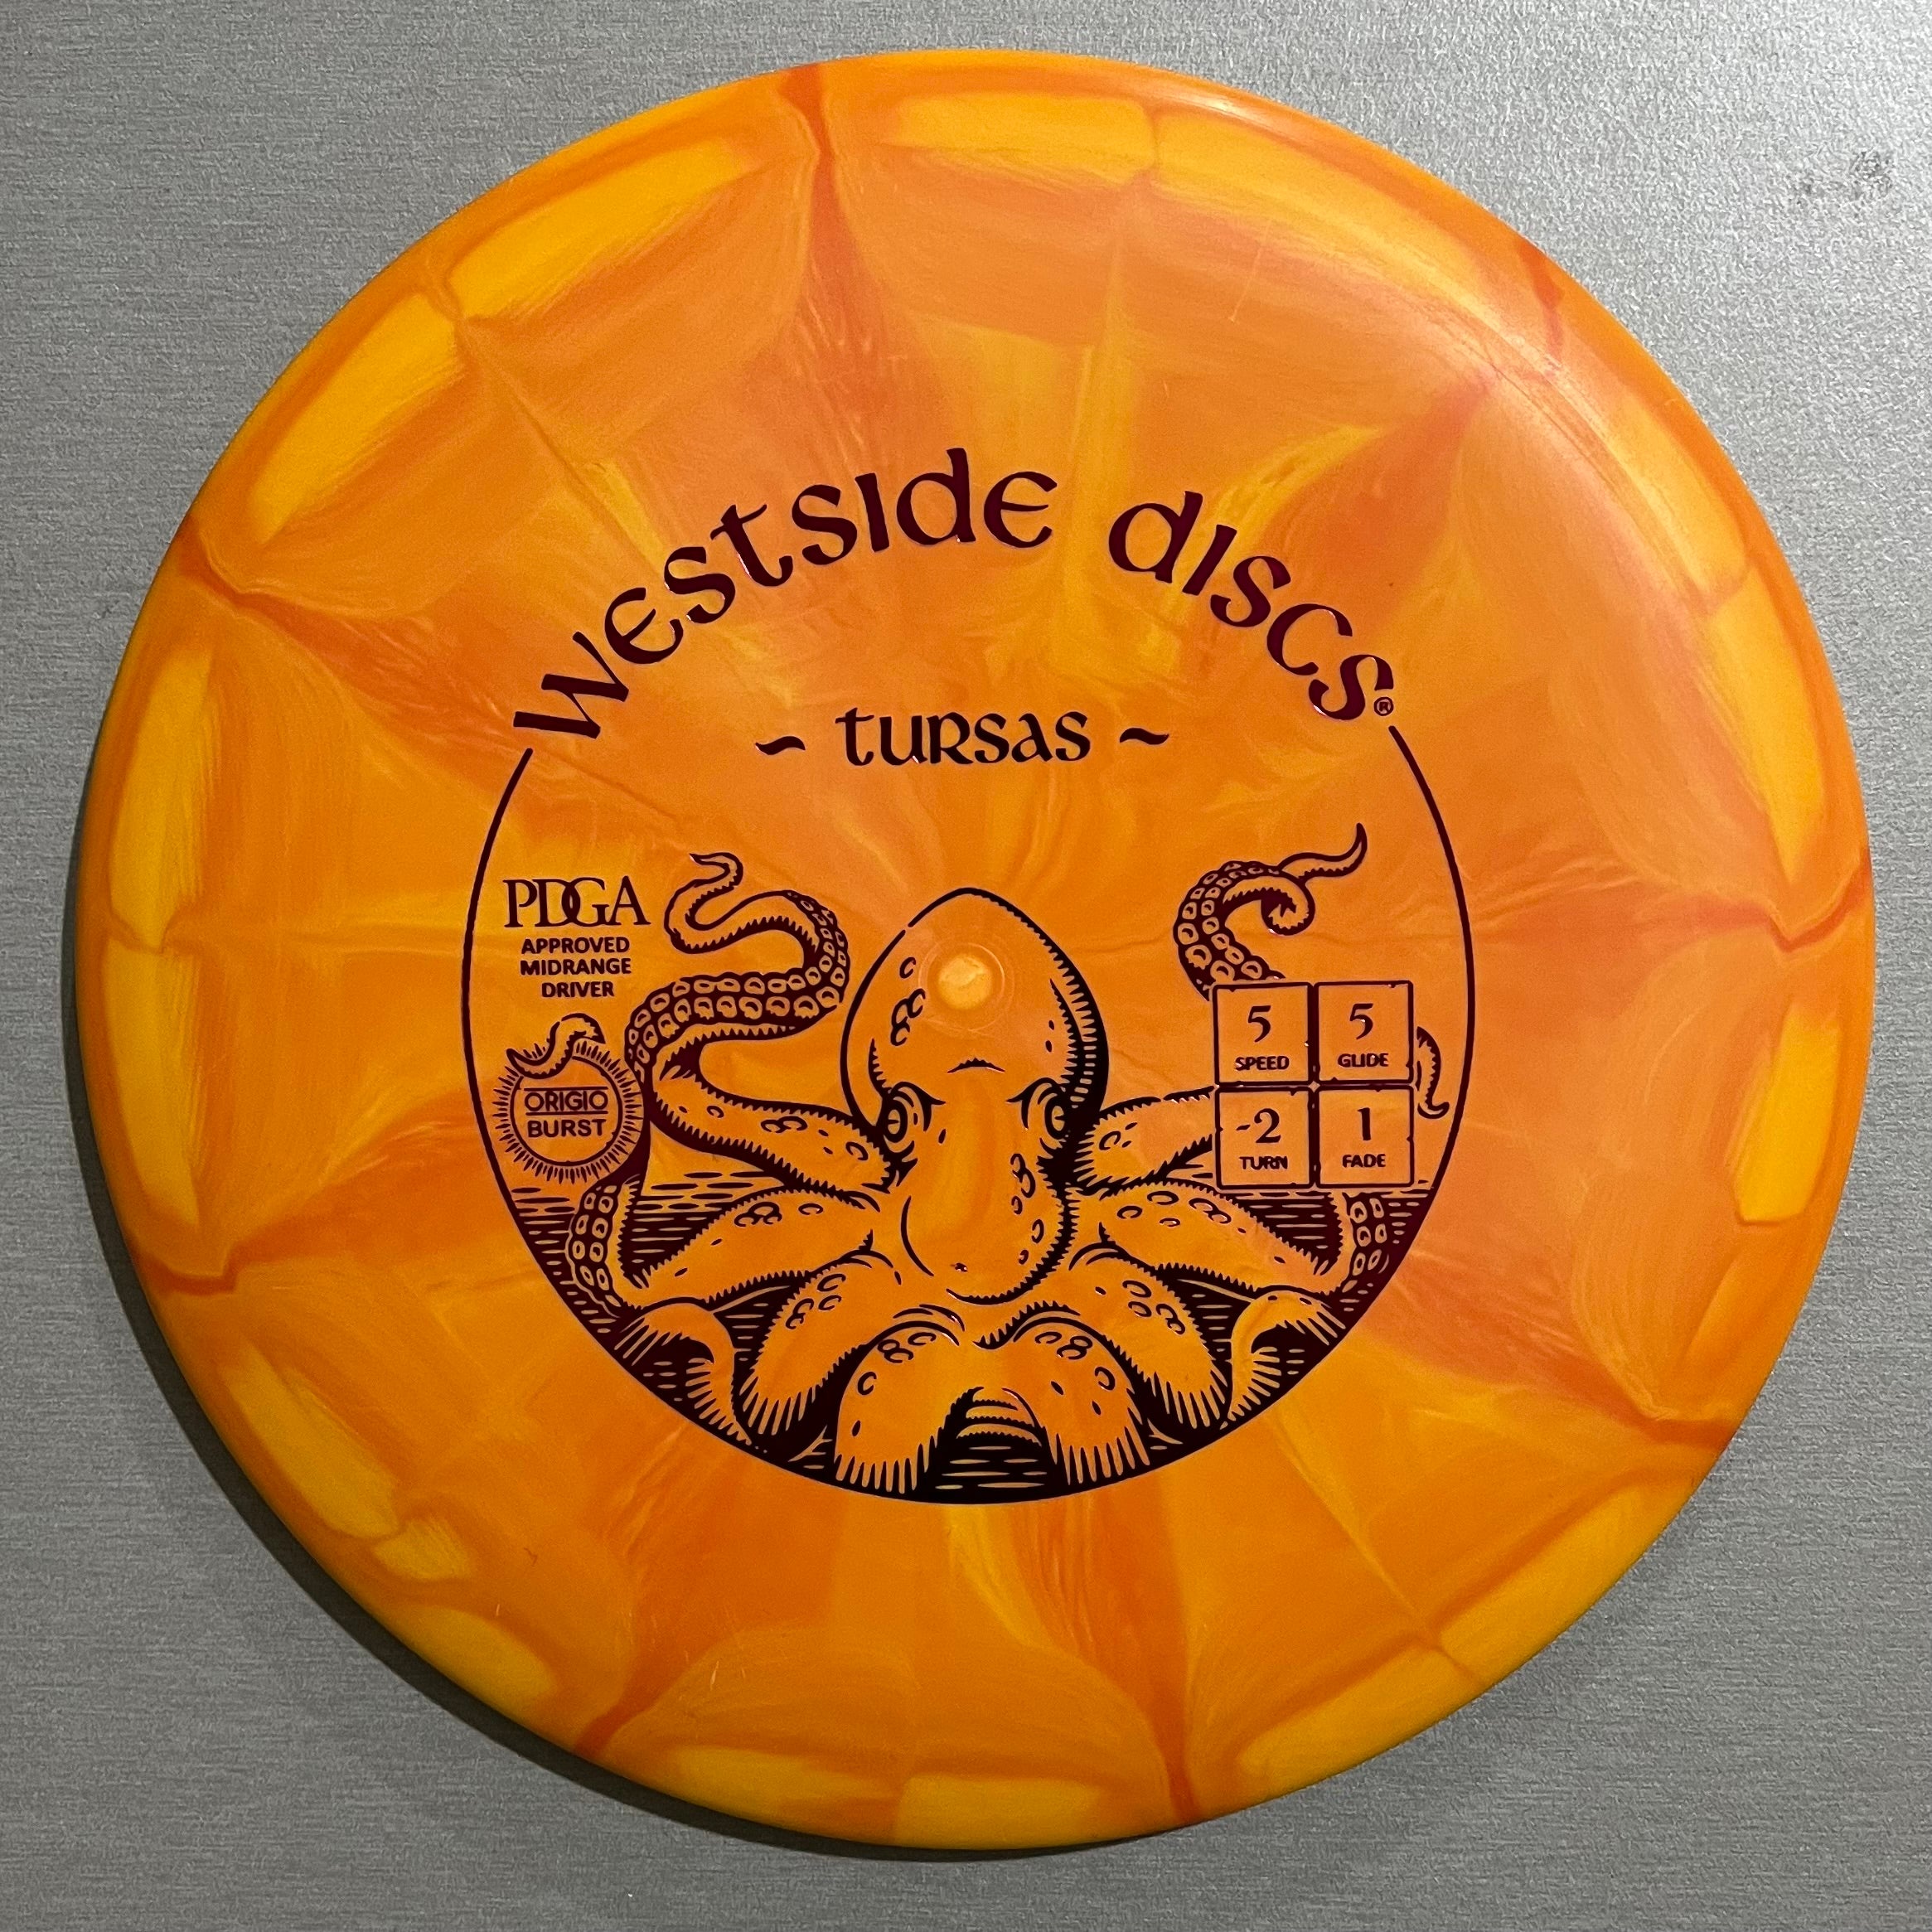 Westside Discs Tursas Origio Burst - Mid Range Disc - Sportinglife Turangi 